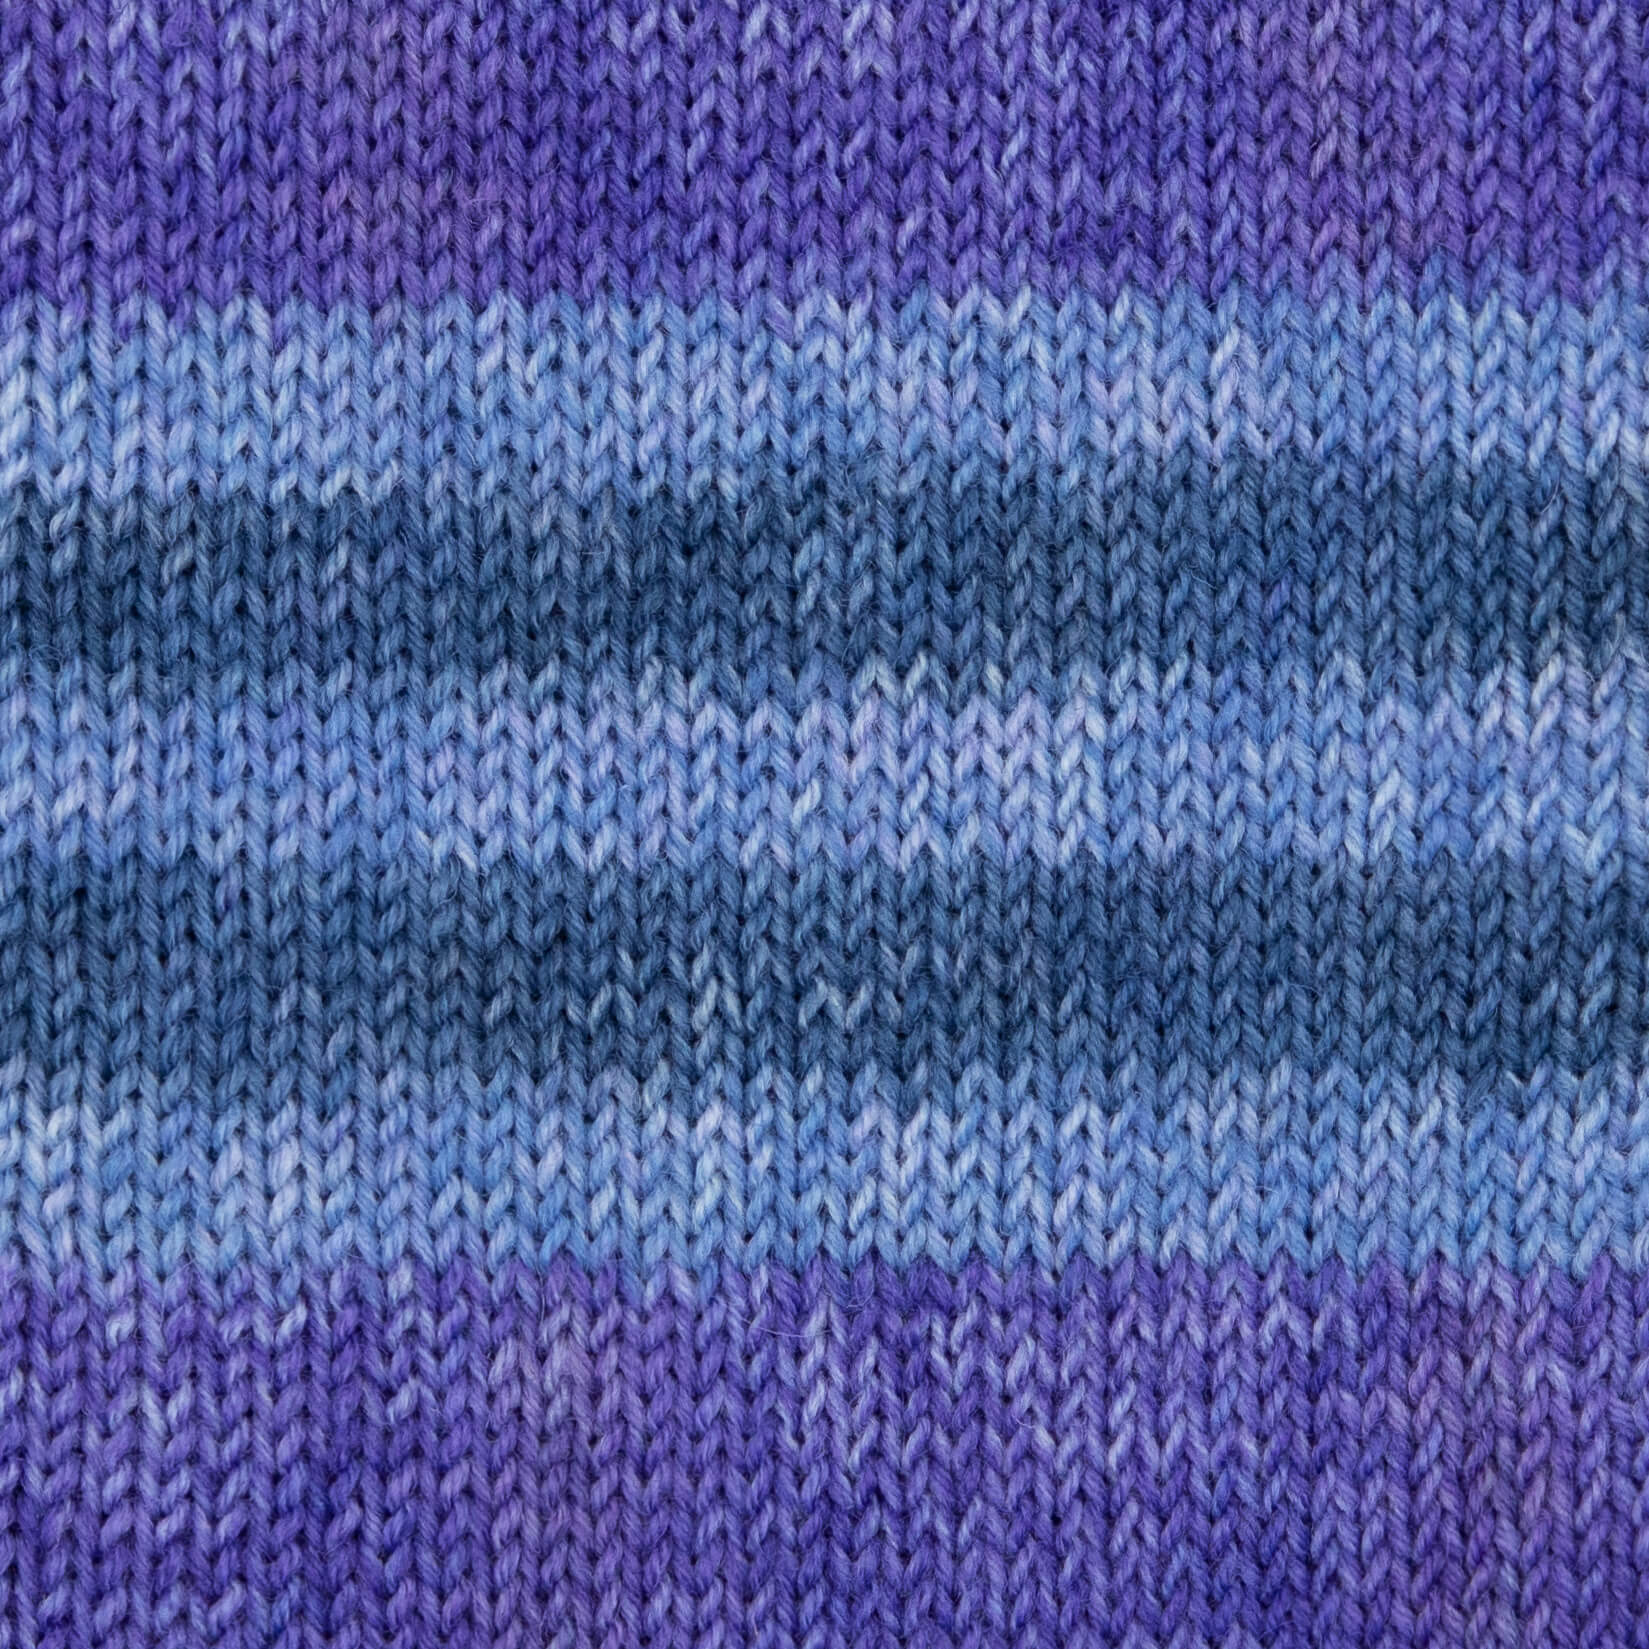 violett-blau-meliert